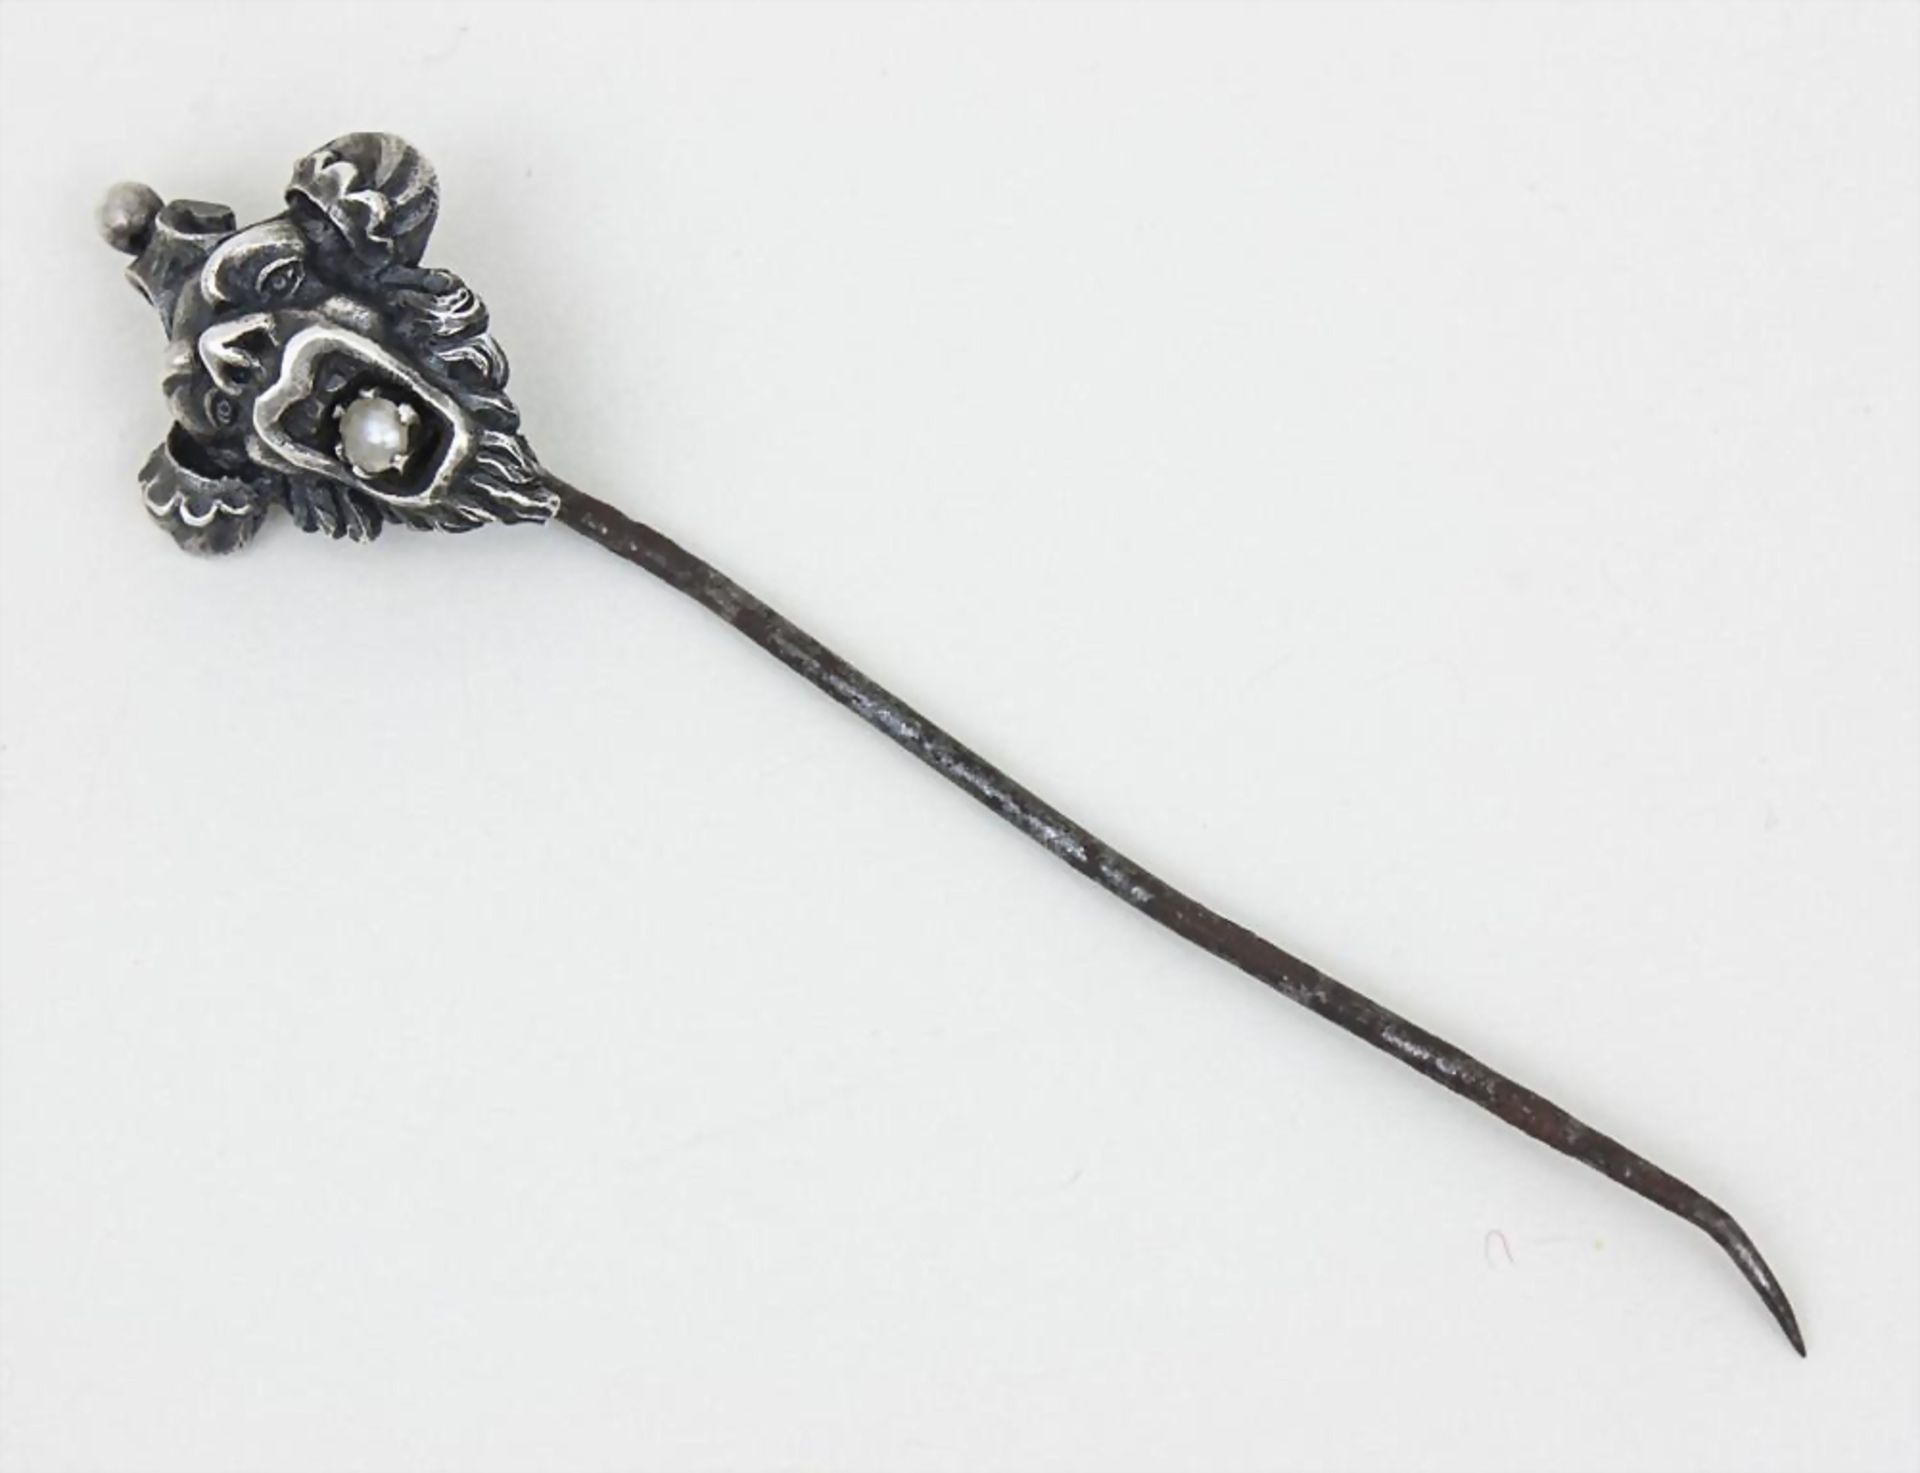 Krawattennadel mit Maskaron / Tie Pin with Mascaron, 19. Jh.Material: Silber geprüft,